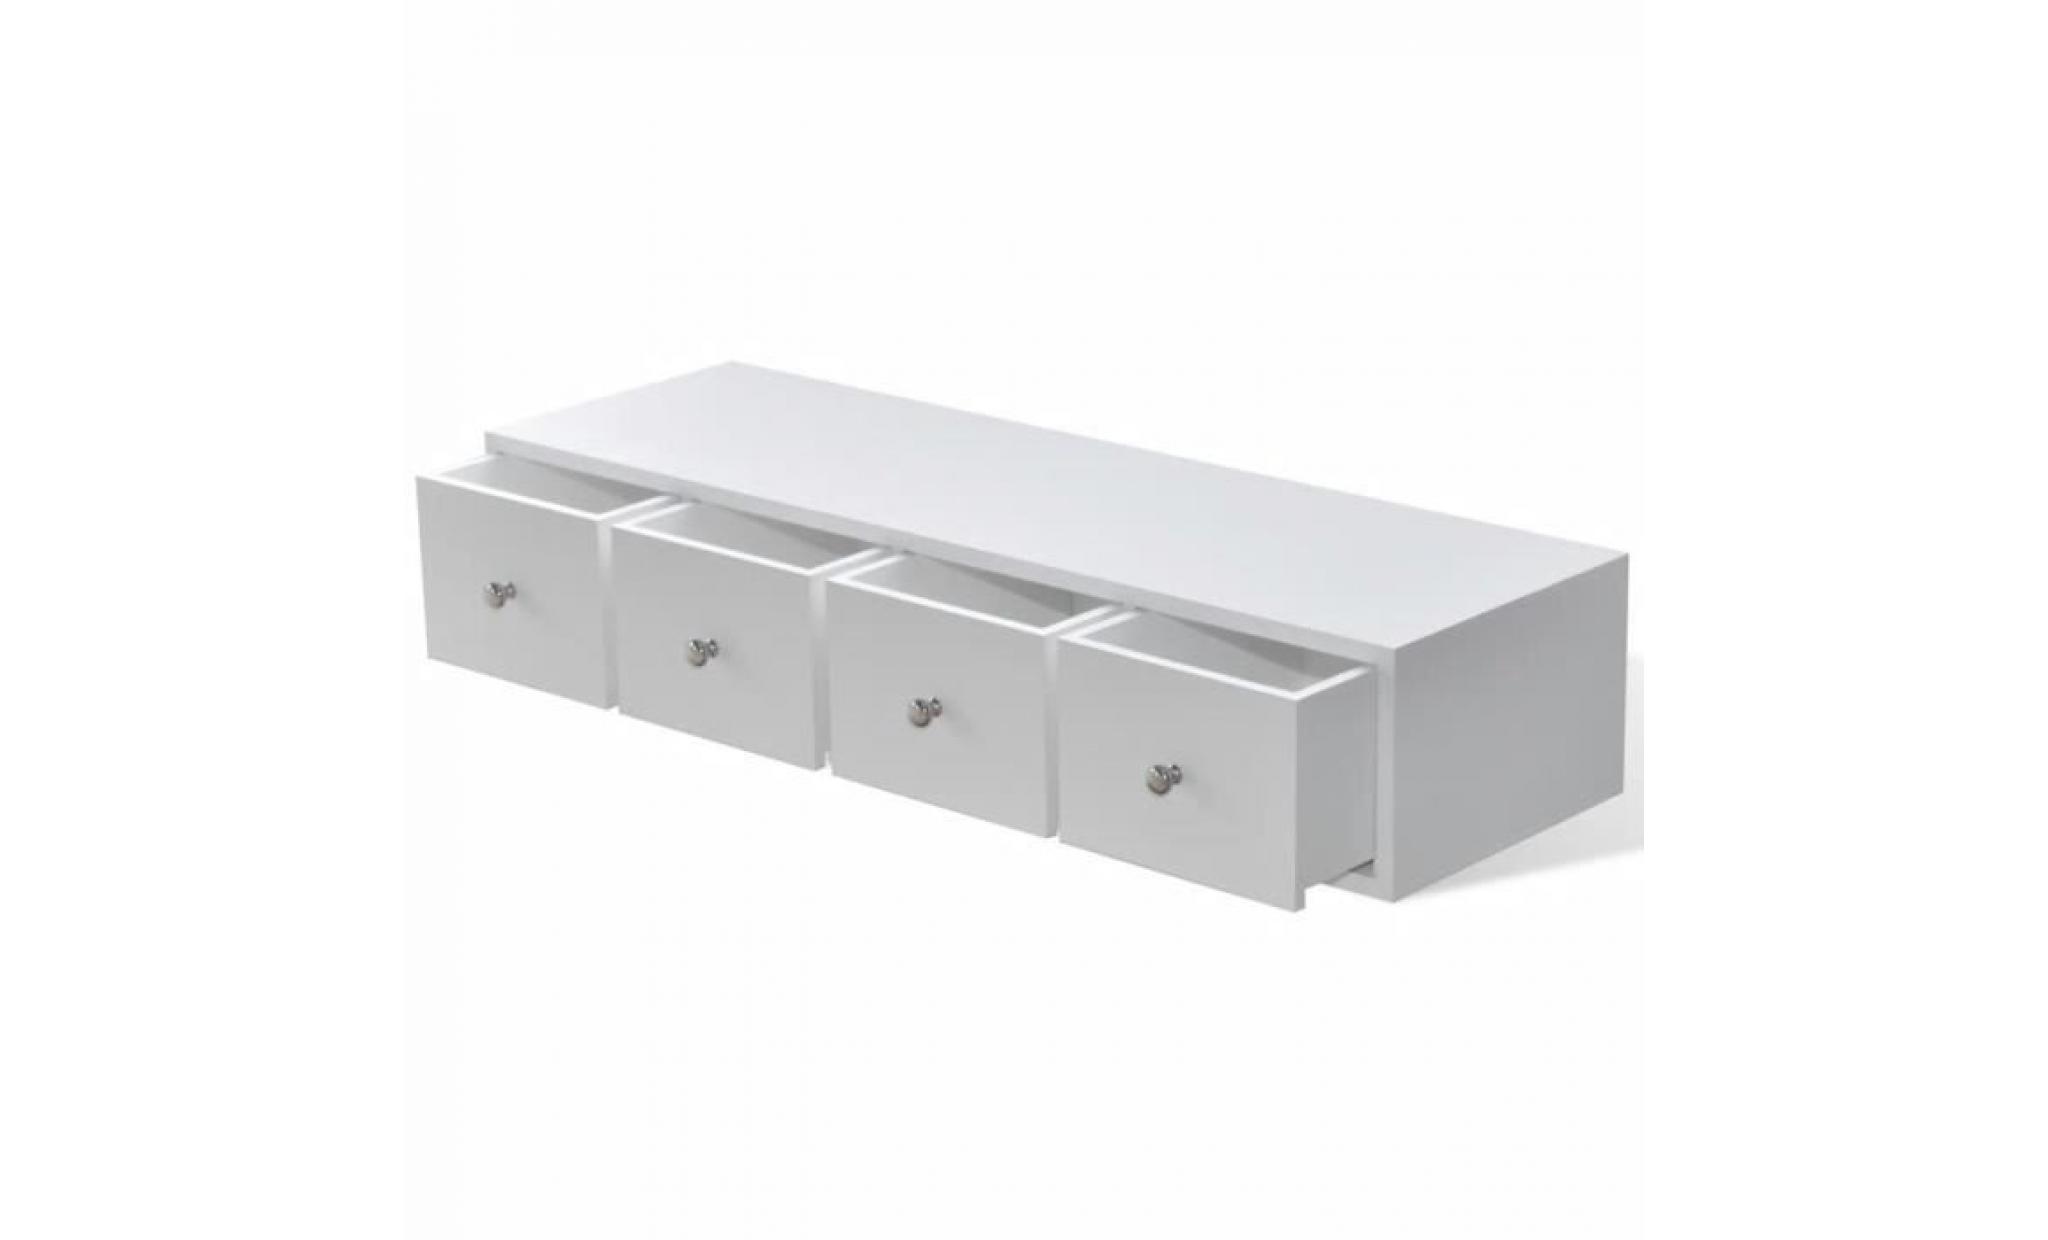 armoire avec 4 tiroirs bois blanc armoire chambre armoire penderie armoire de chambre contemporain pas cher